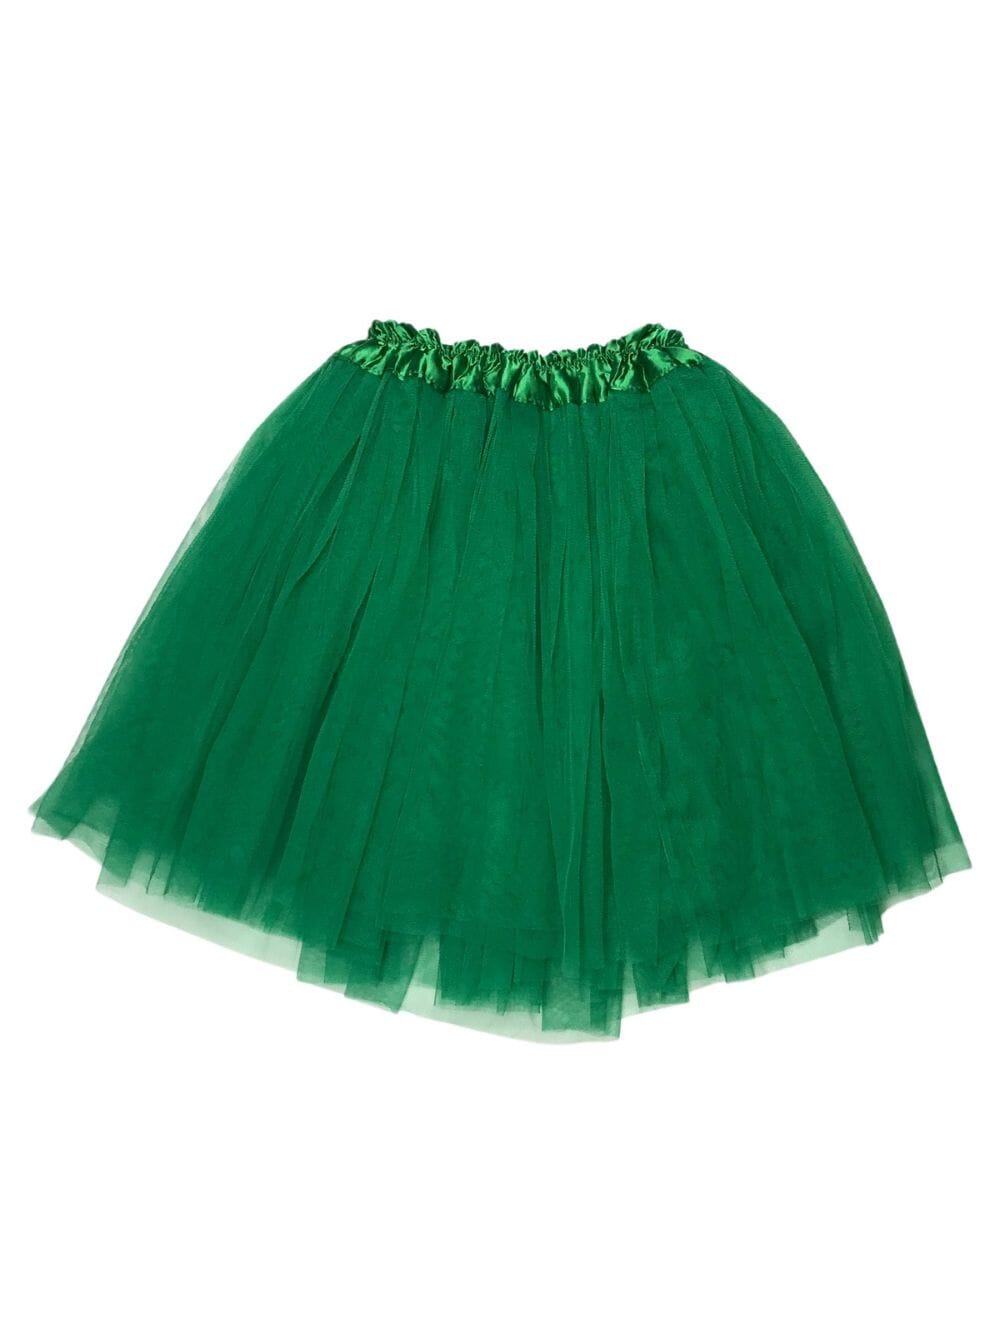 Pine Green Plus Size Adult Tutu Skirt - Women's Plus Size 3- Layer Basic Ballet Costume Dance Tutus - Sydney So Sweet